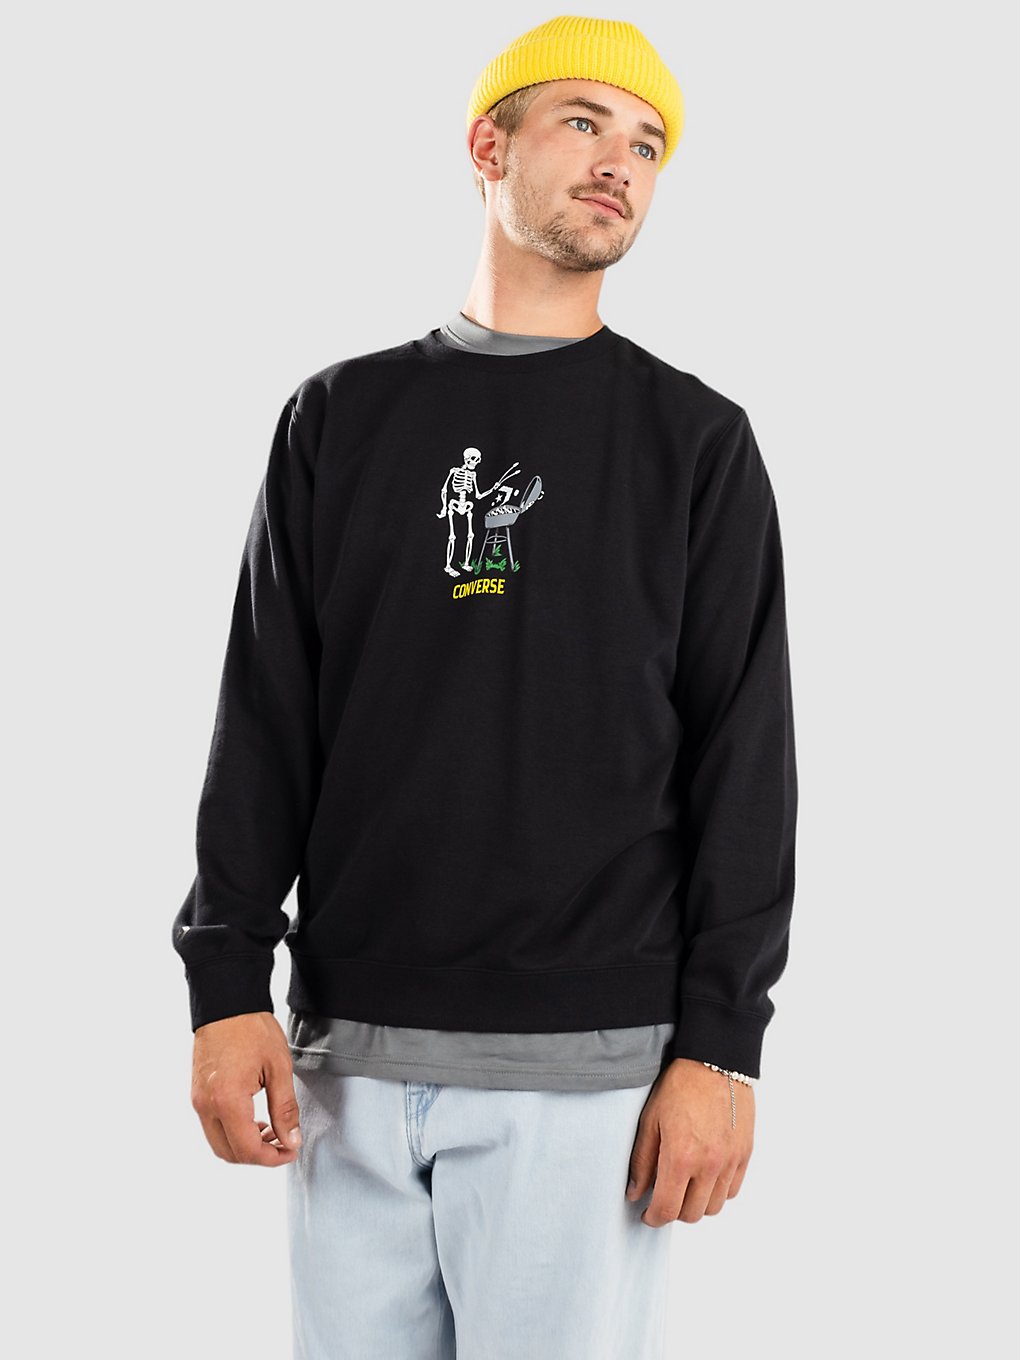 Converse Grilling Skeleton Graphic Crew Sweater converse black kaufen